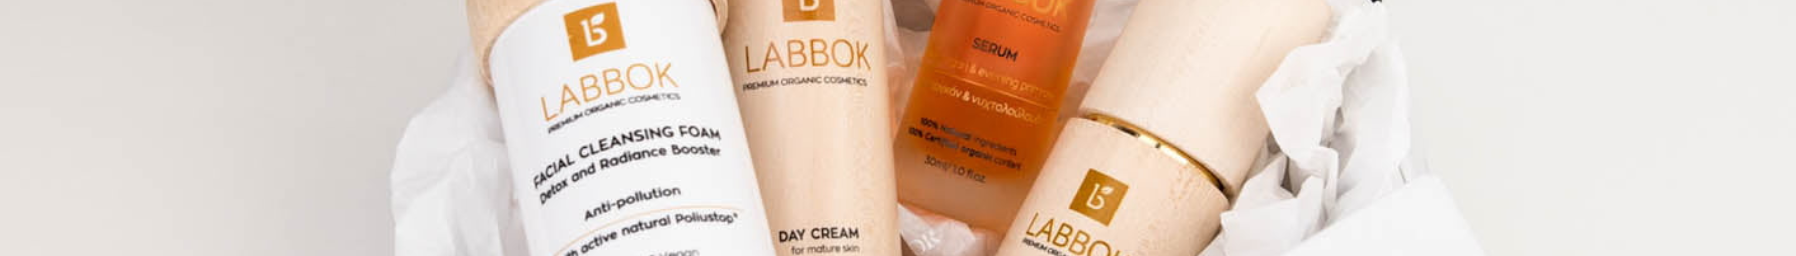 Labbok Premium Organic Skincare - New supplier on Syncee Marketplace